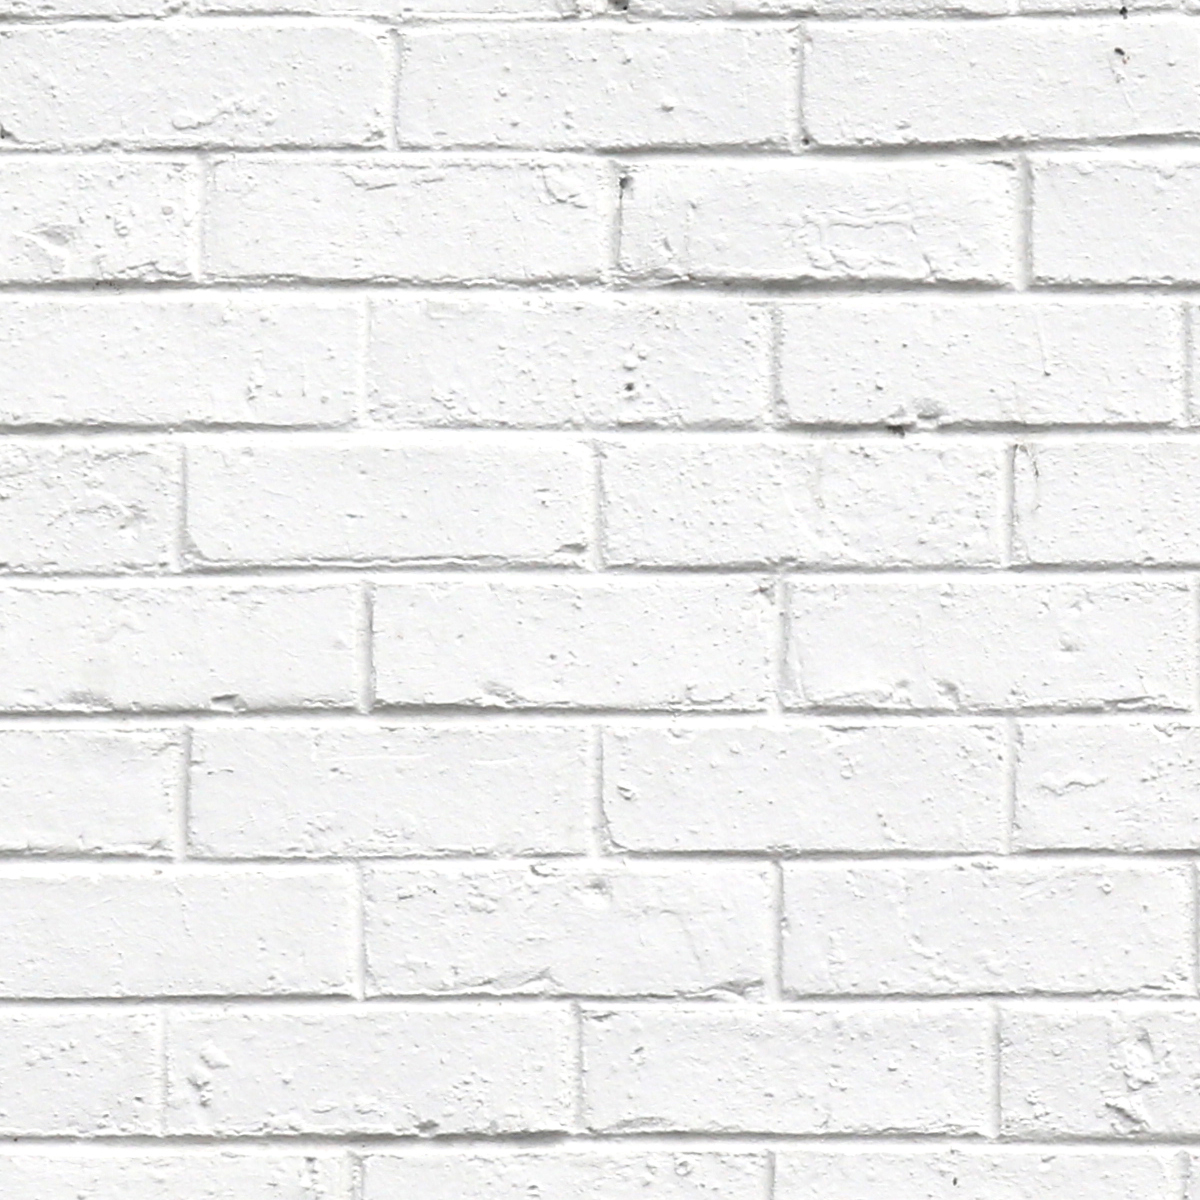 White bricks panoramic wallpaper Acte-Deco